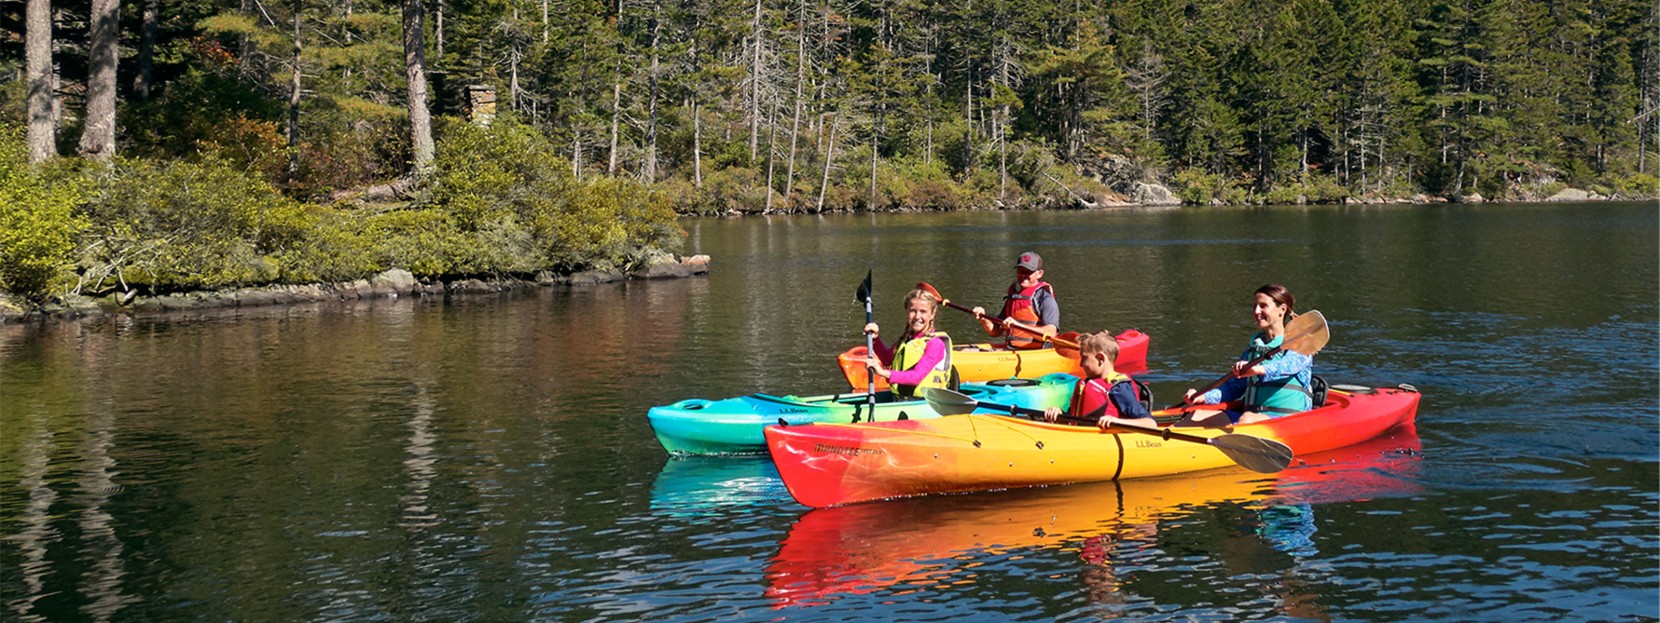 A family kayaking on a lake.